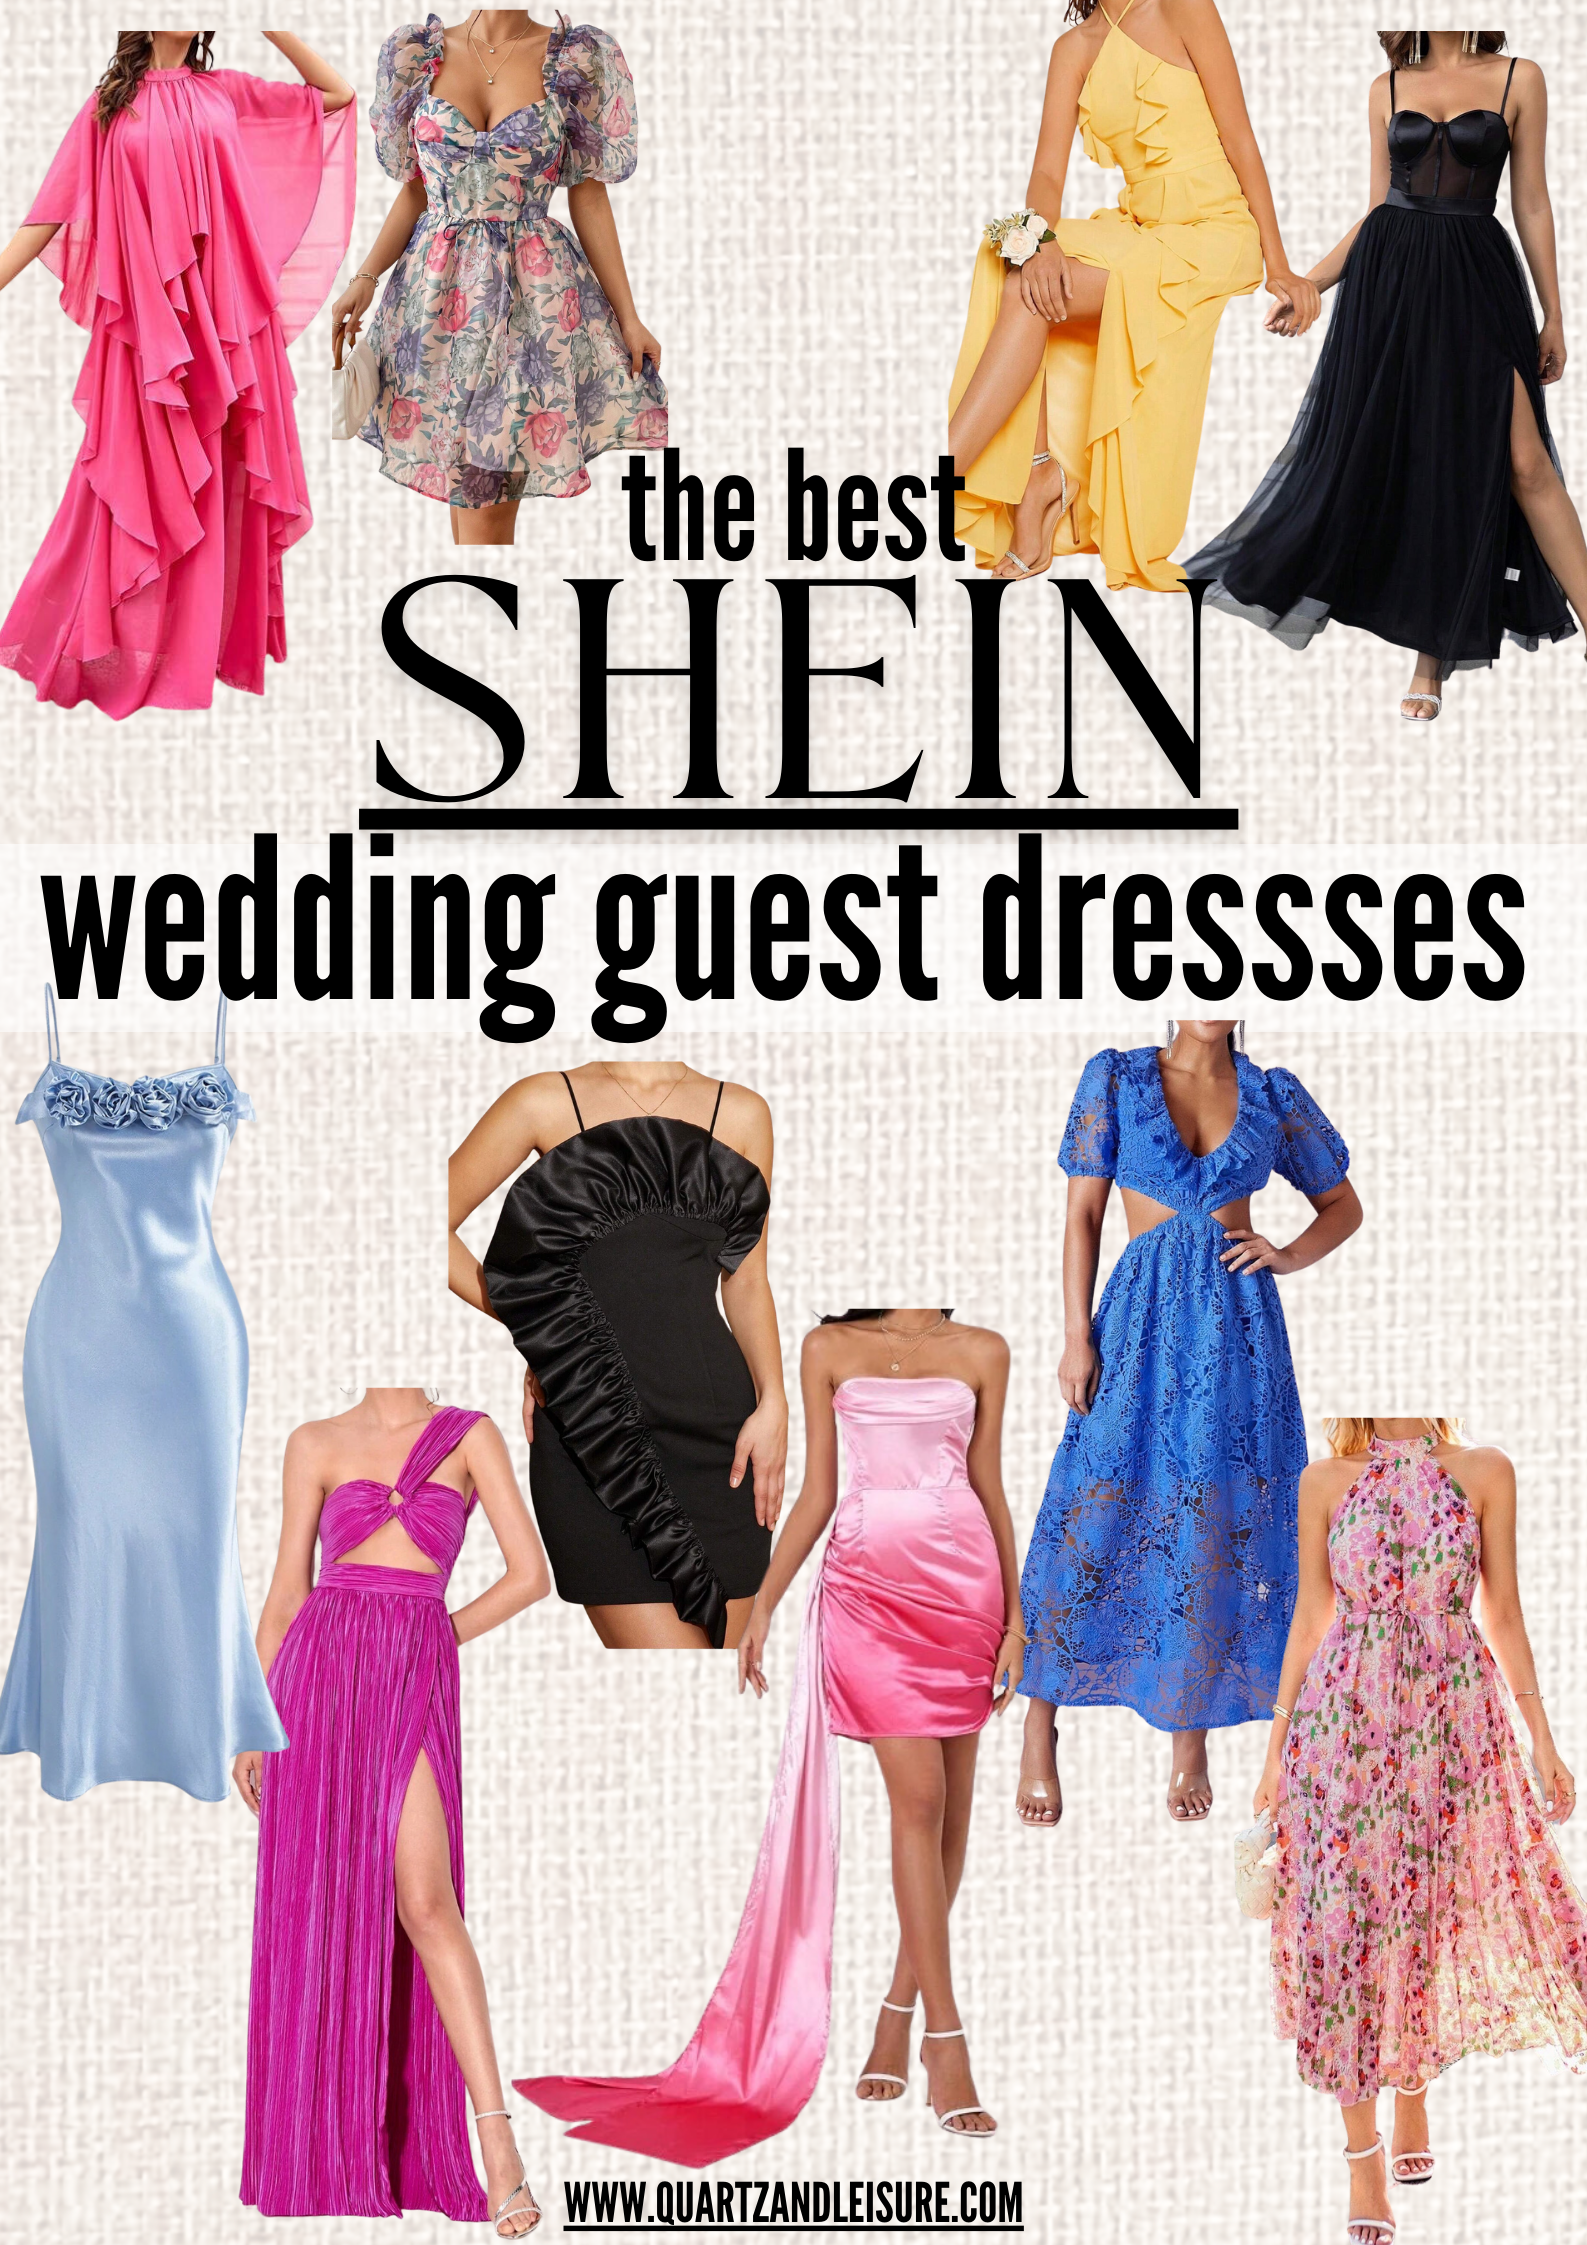 The Best Shein Wedding Guest Dresses